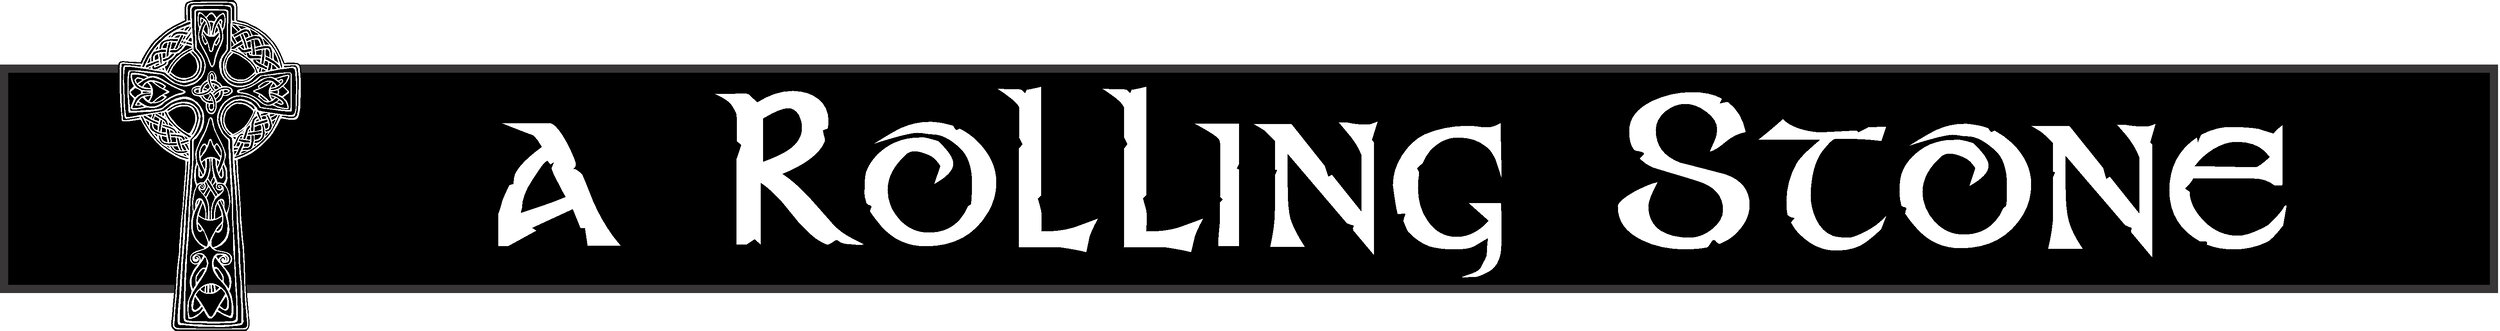 A Rolling Stone Logo (1).JPG